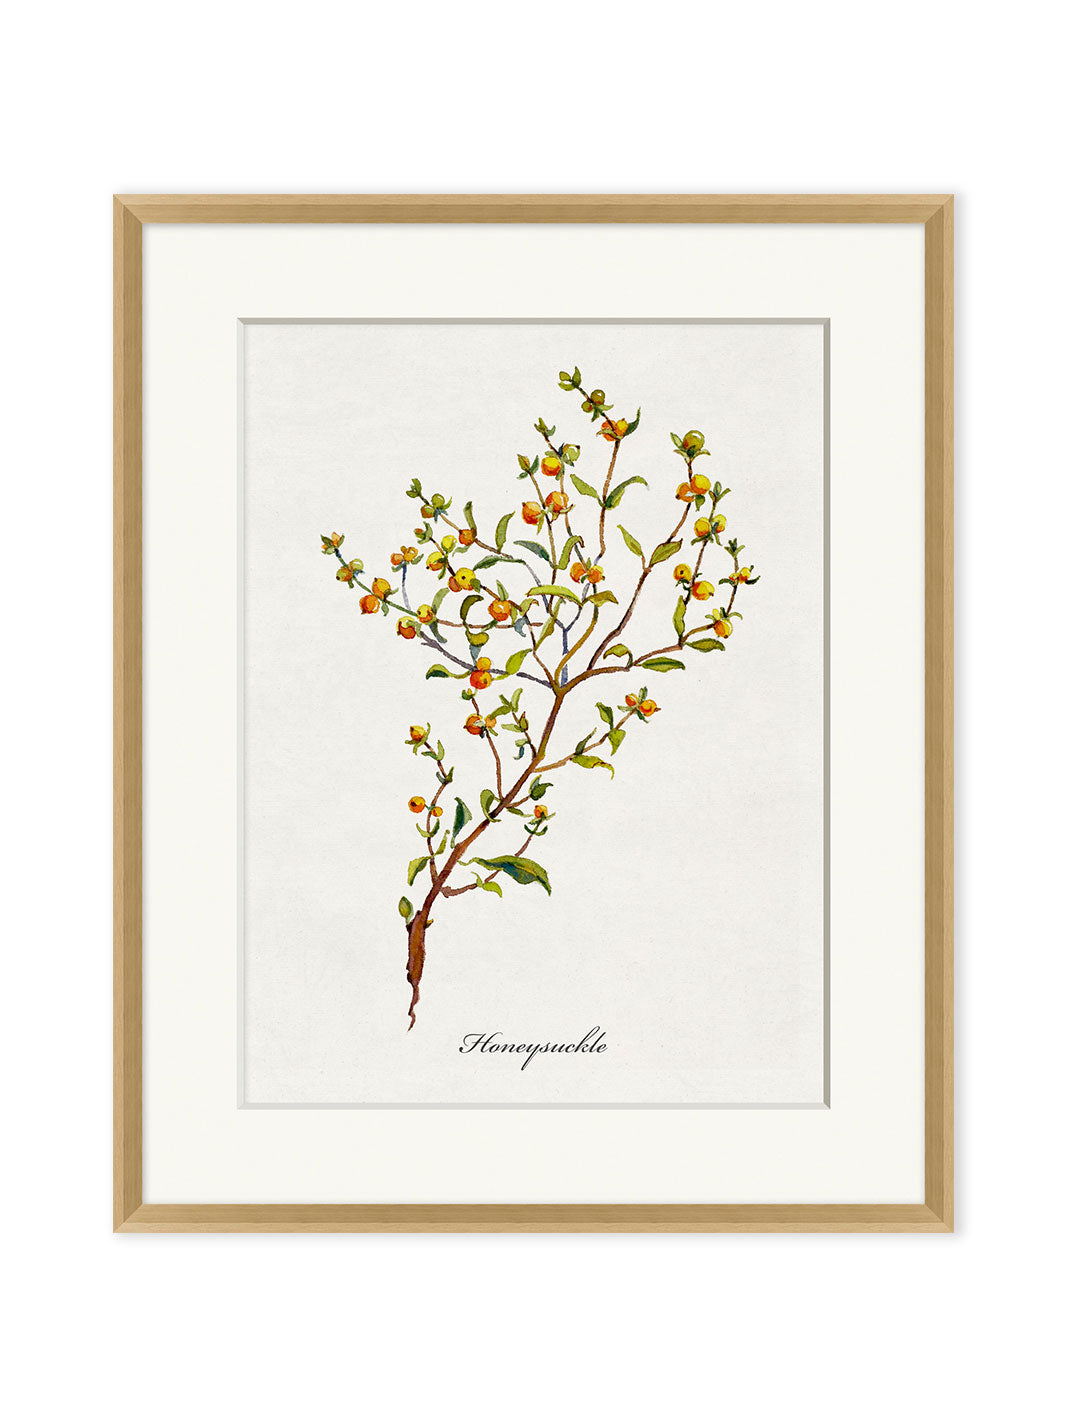 'Valley Wildflower Honeysuckle' by Nathan Turner Framed Art